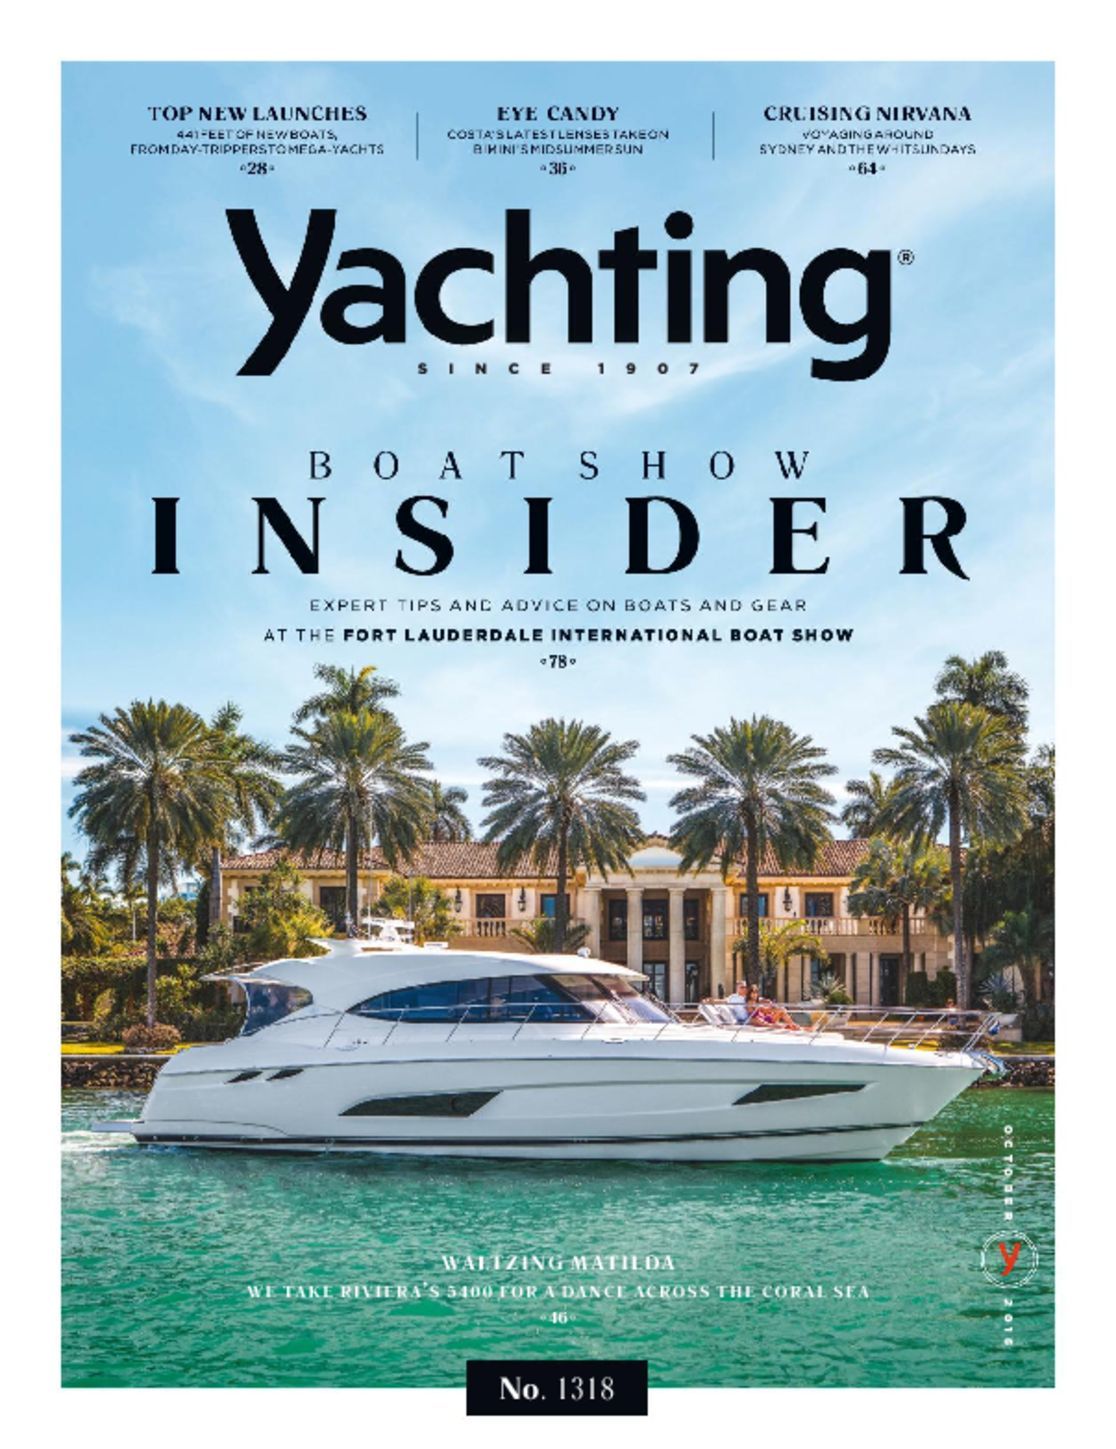 land yachting magazine